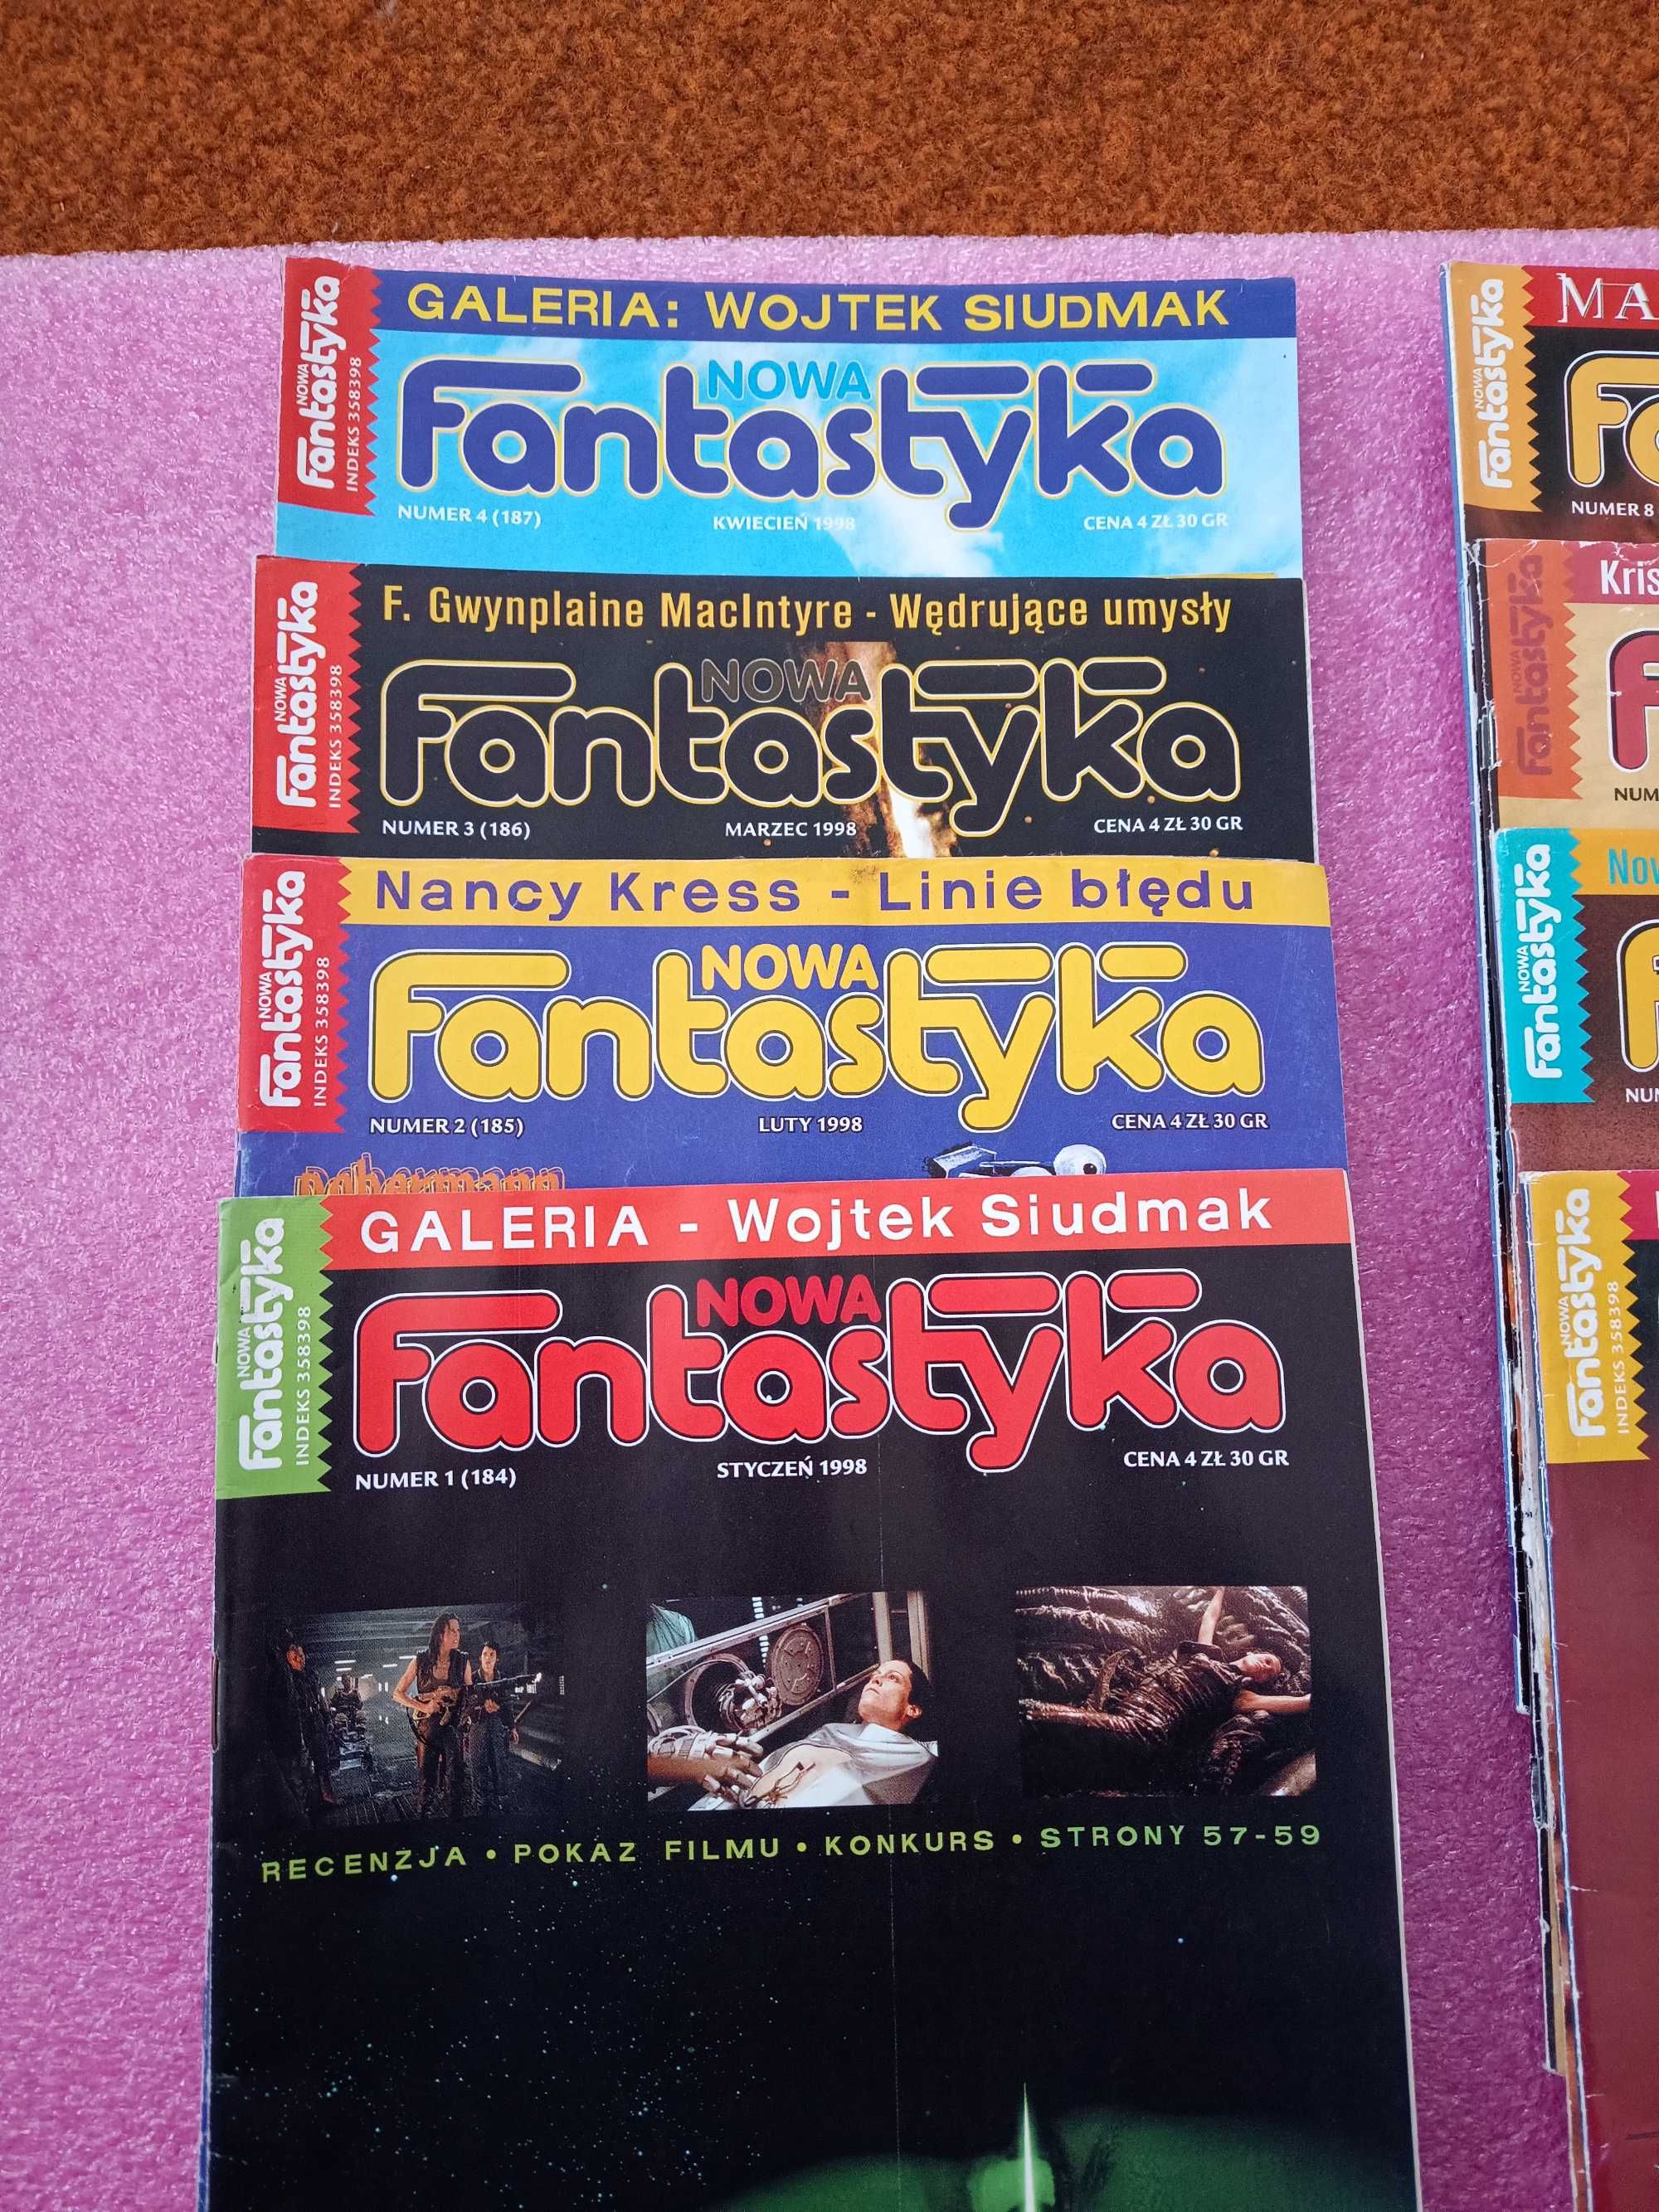 Czasopismo Nowa Fantastyka '98 '99 2000